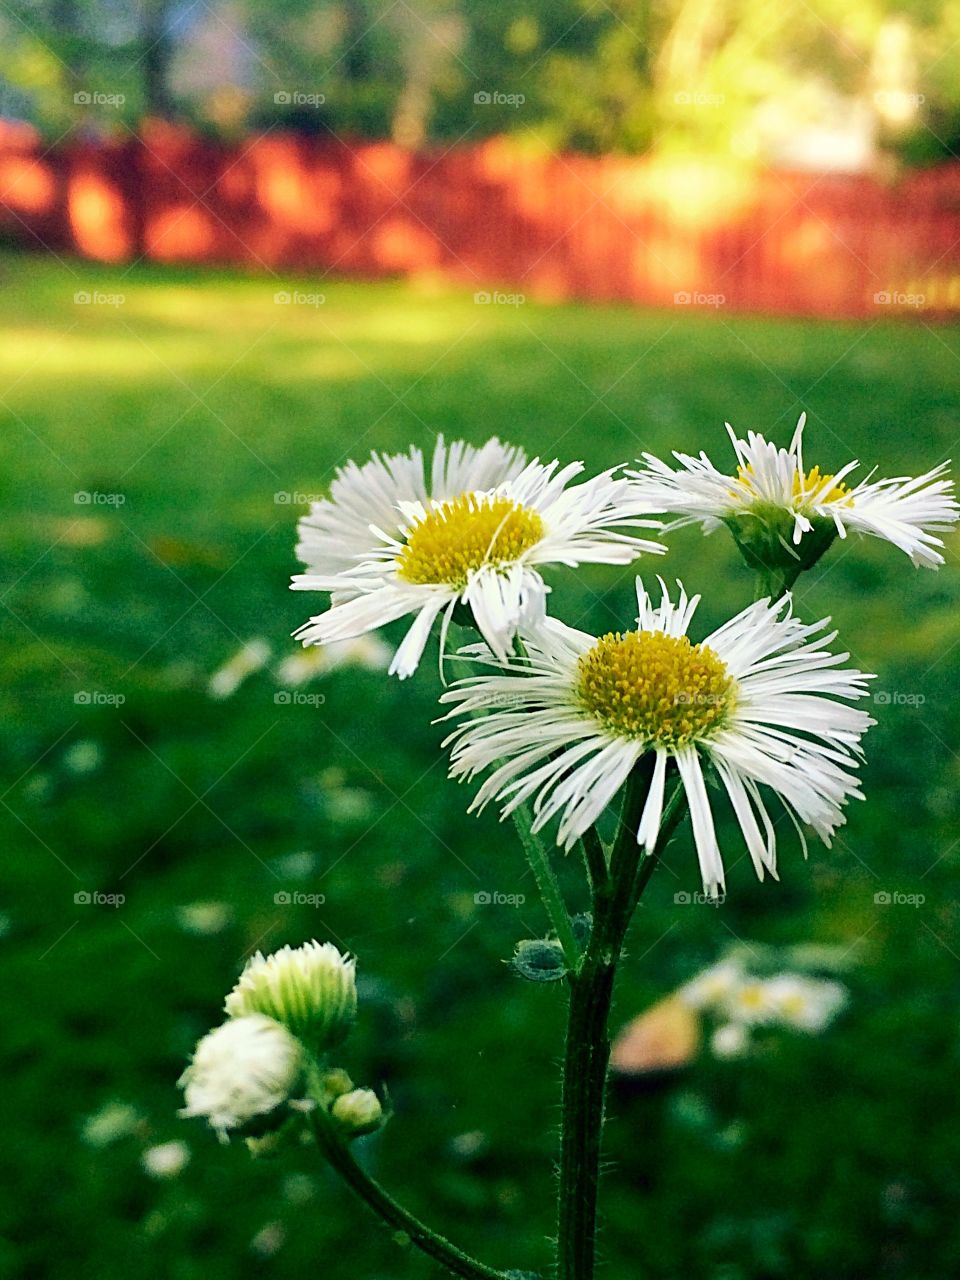 Backyard Daisies. Spring, Georgia, daisy, daisies, beautiful, nature, simple